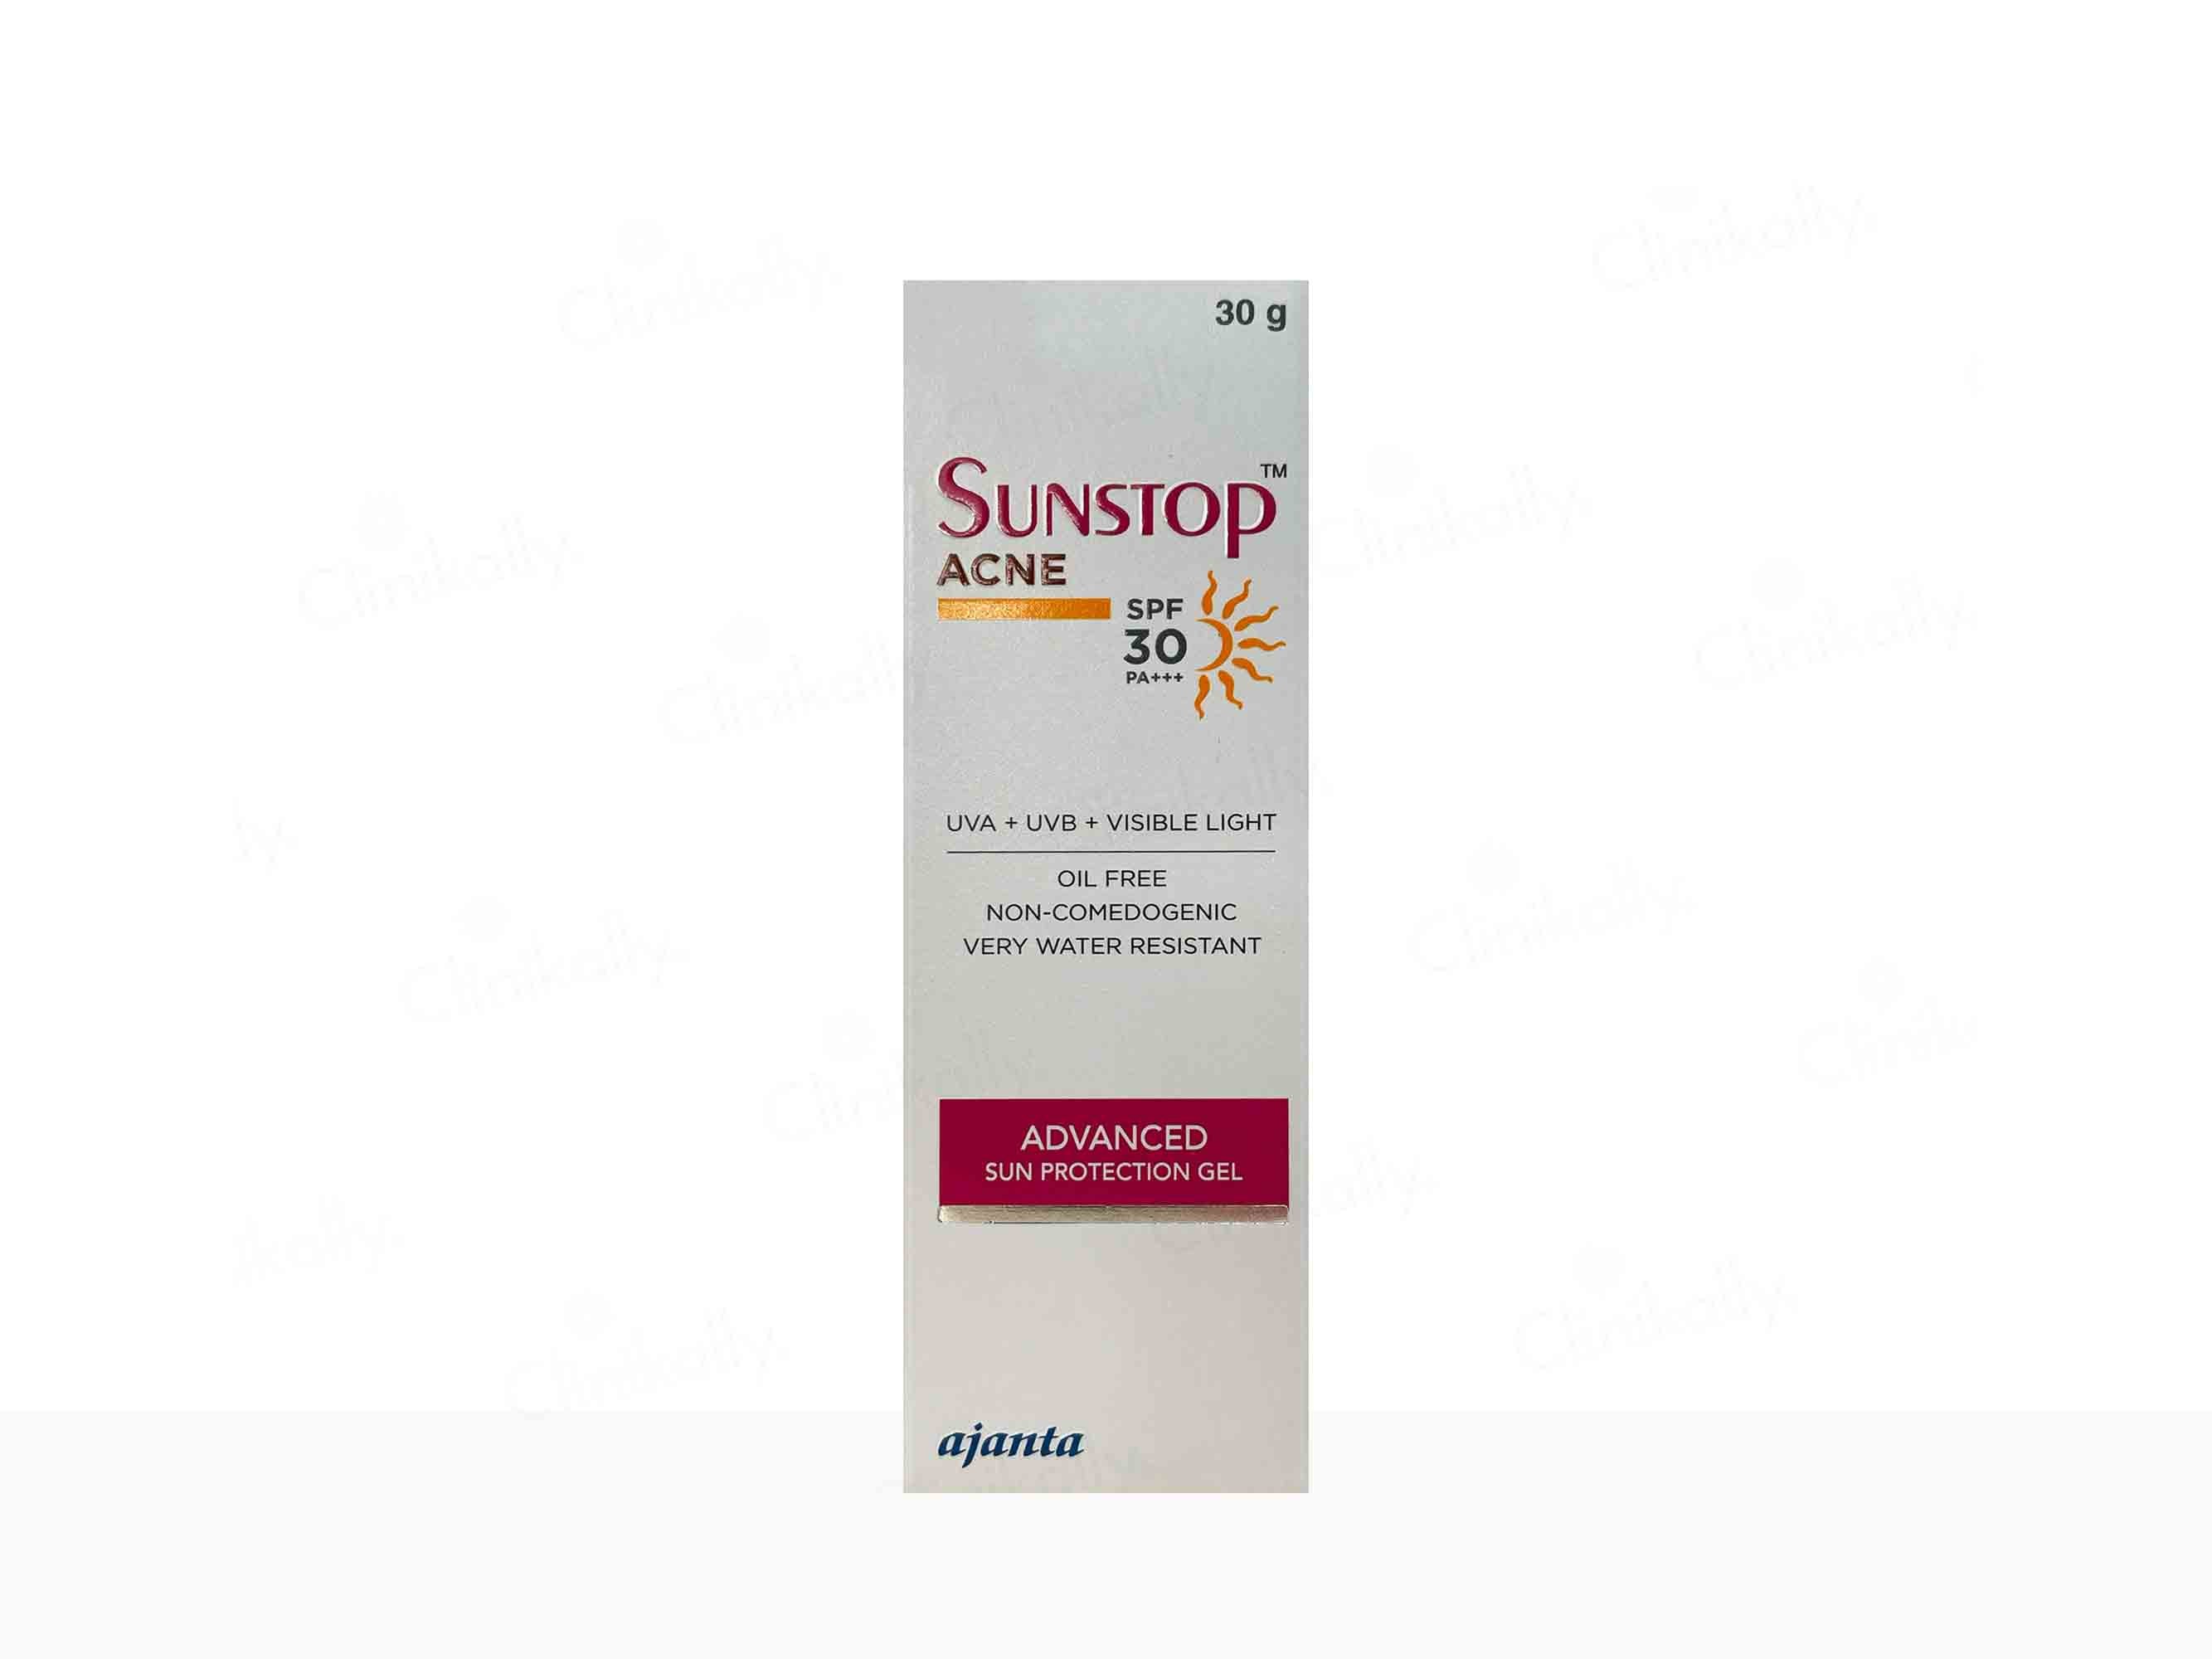 Sunstop Acne Advanced Sun Protection Gel SPF 30 PA+++